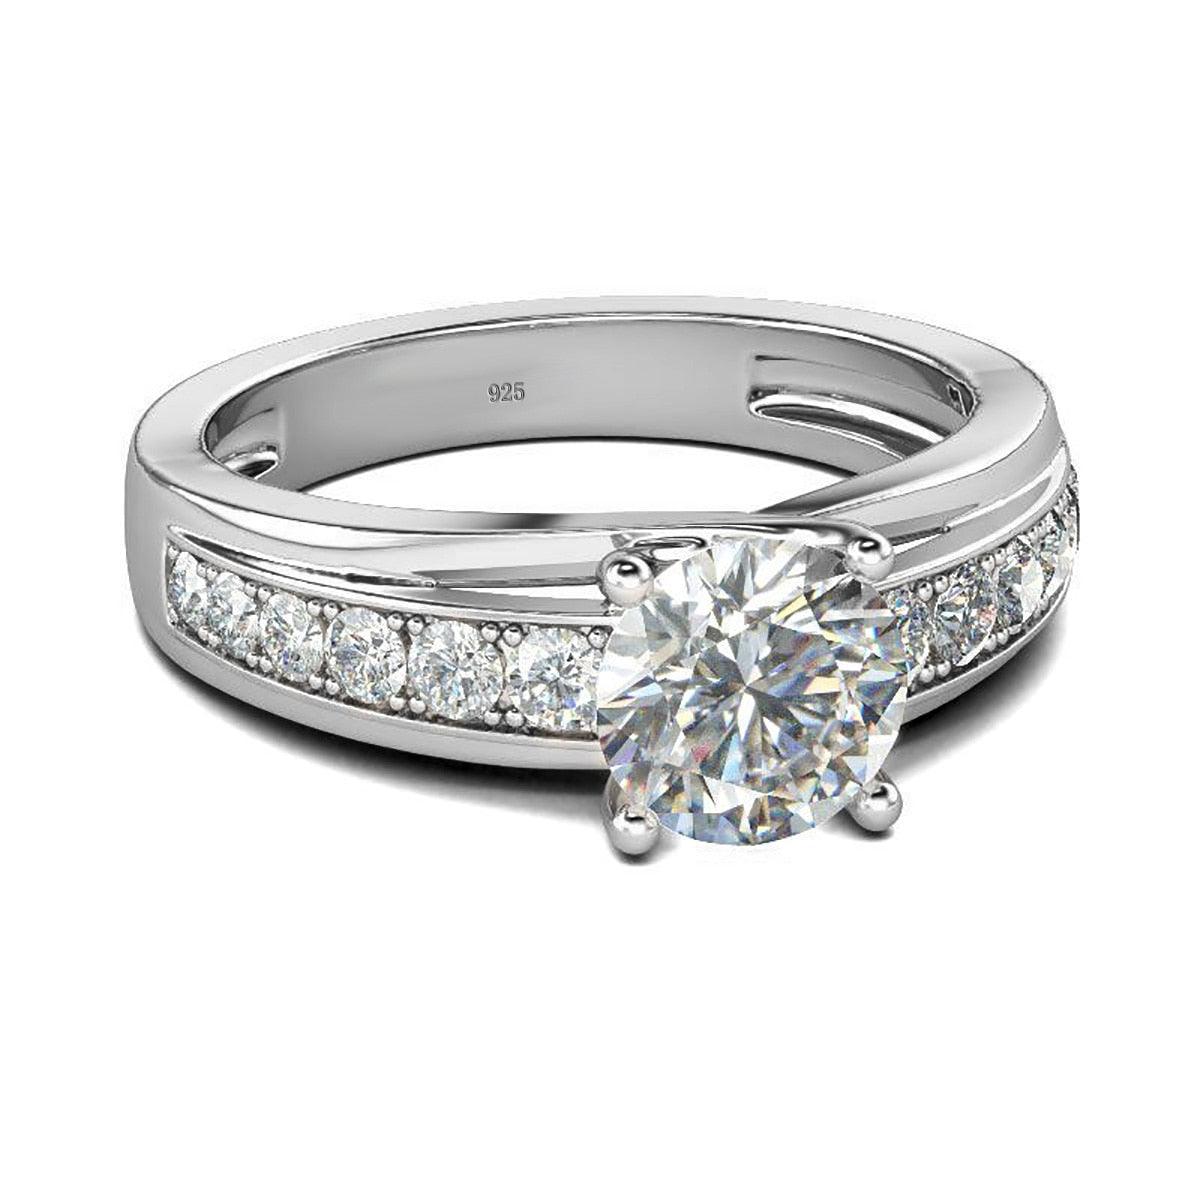 Dazzling 1 Carat High Quality Moissanite Diamonds Rings For Women - Rhodium Plated Luxury Fine Jewellery - The Jewellery Supermarket